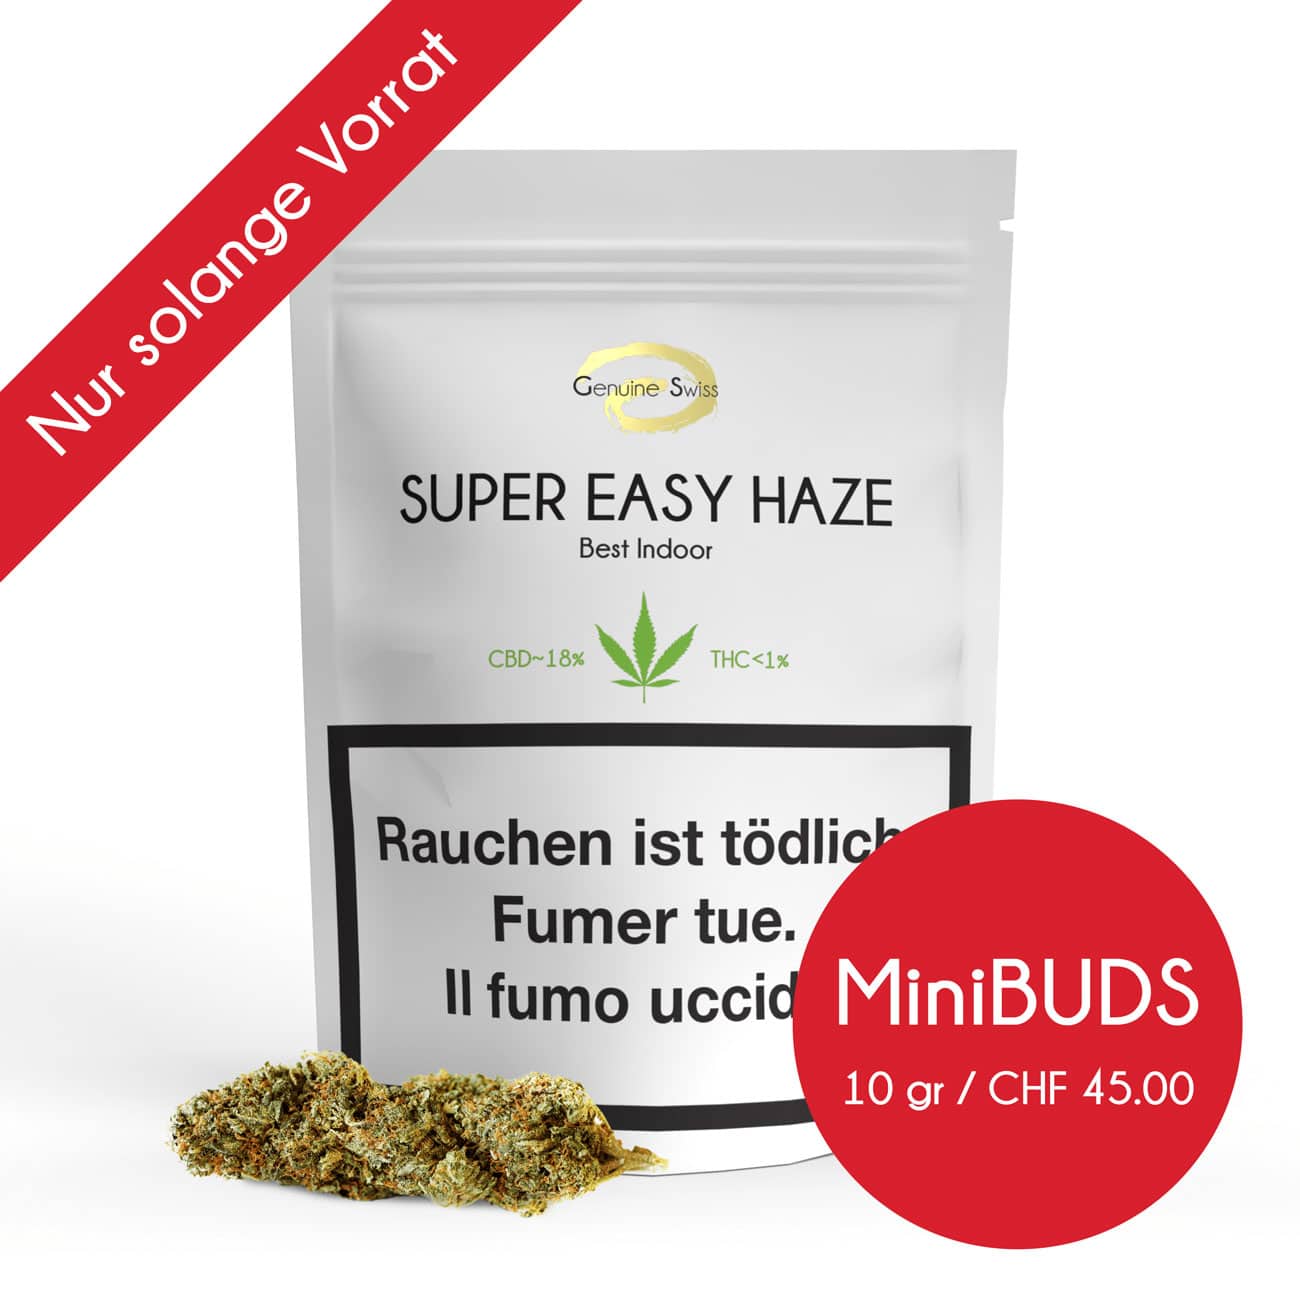 Genuine Swiss Super Easy Haze Minibuds, Small Buds